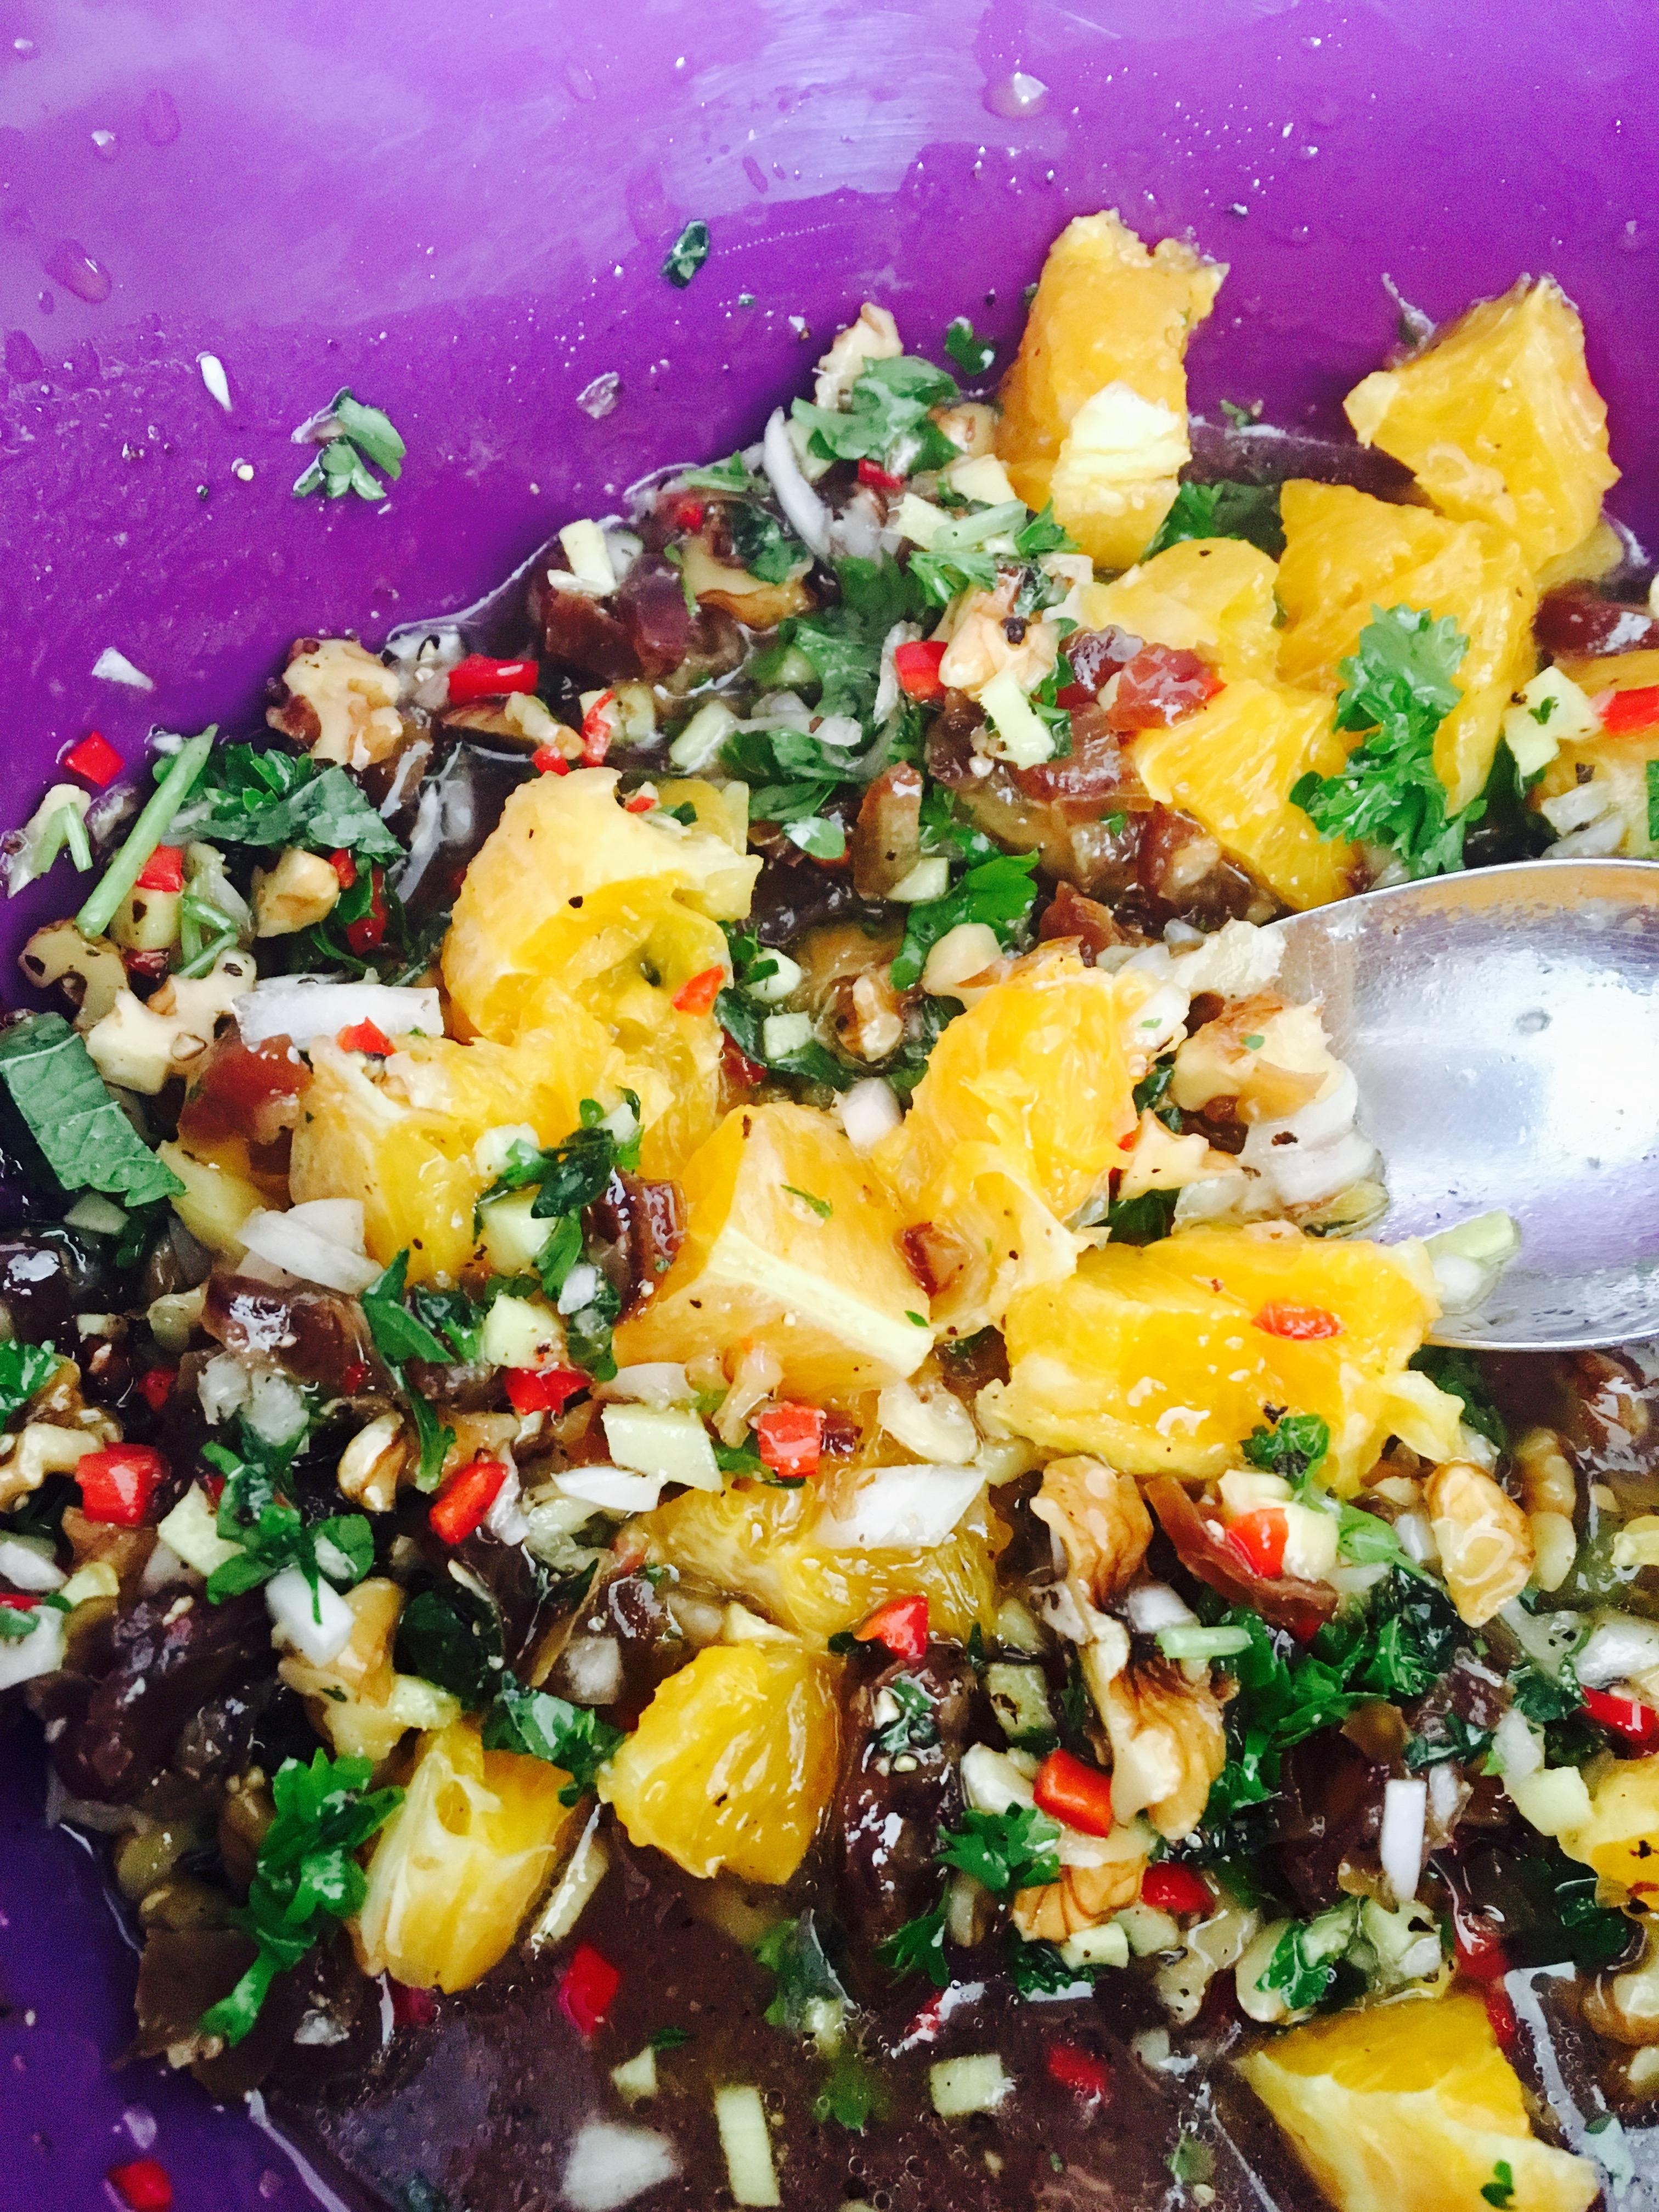 Lieblings-Salat!
Dressing für einen Gurke-Mango-Avocado Salat 